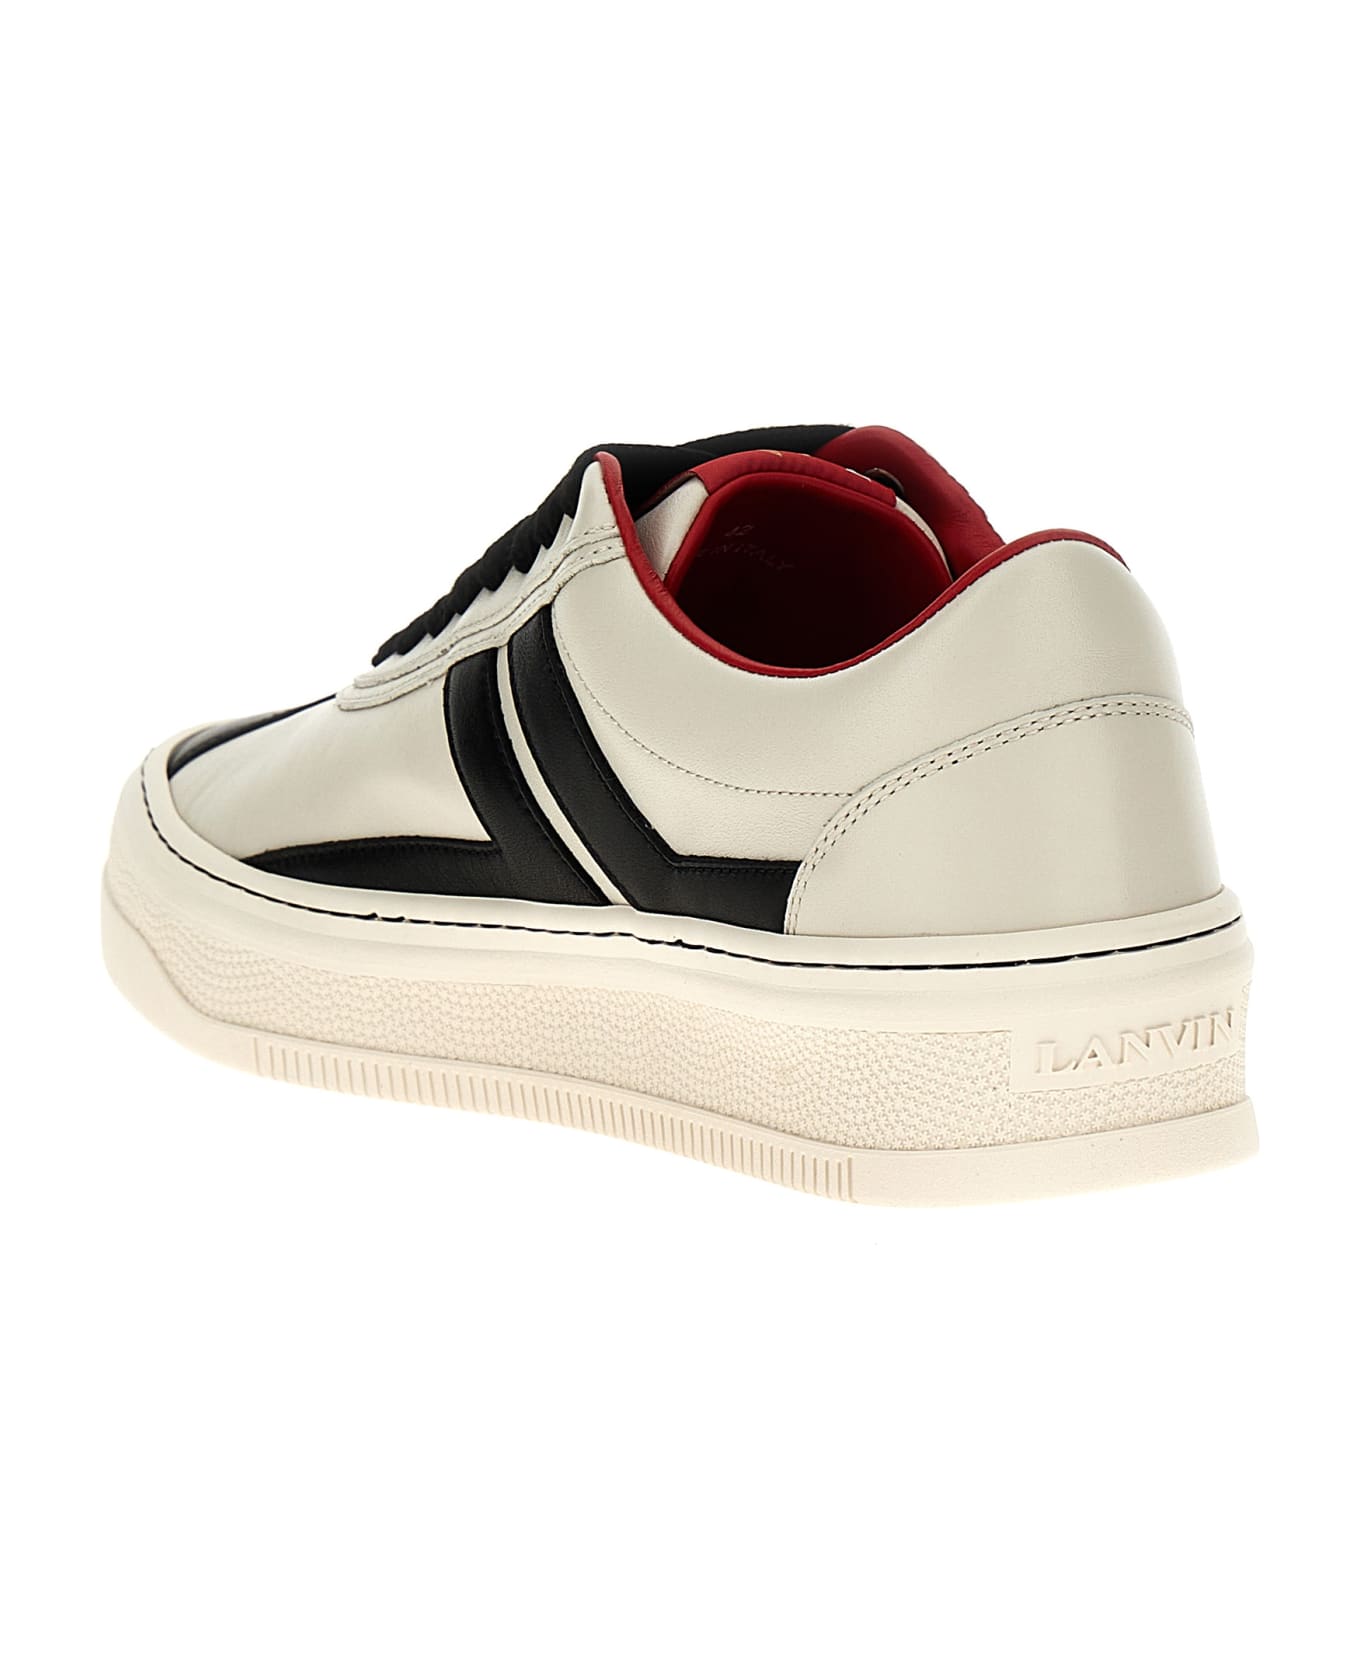 Lanvin 'lanvinxfuture' Sneakers - White/Black